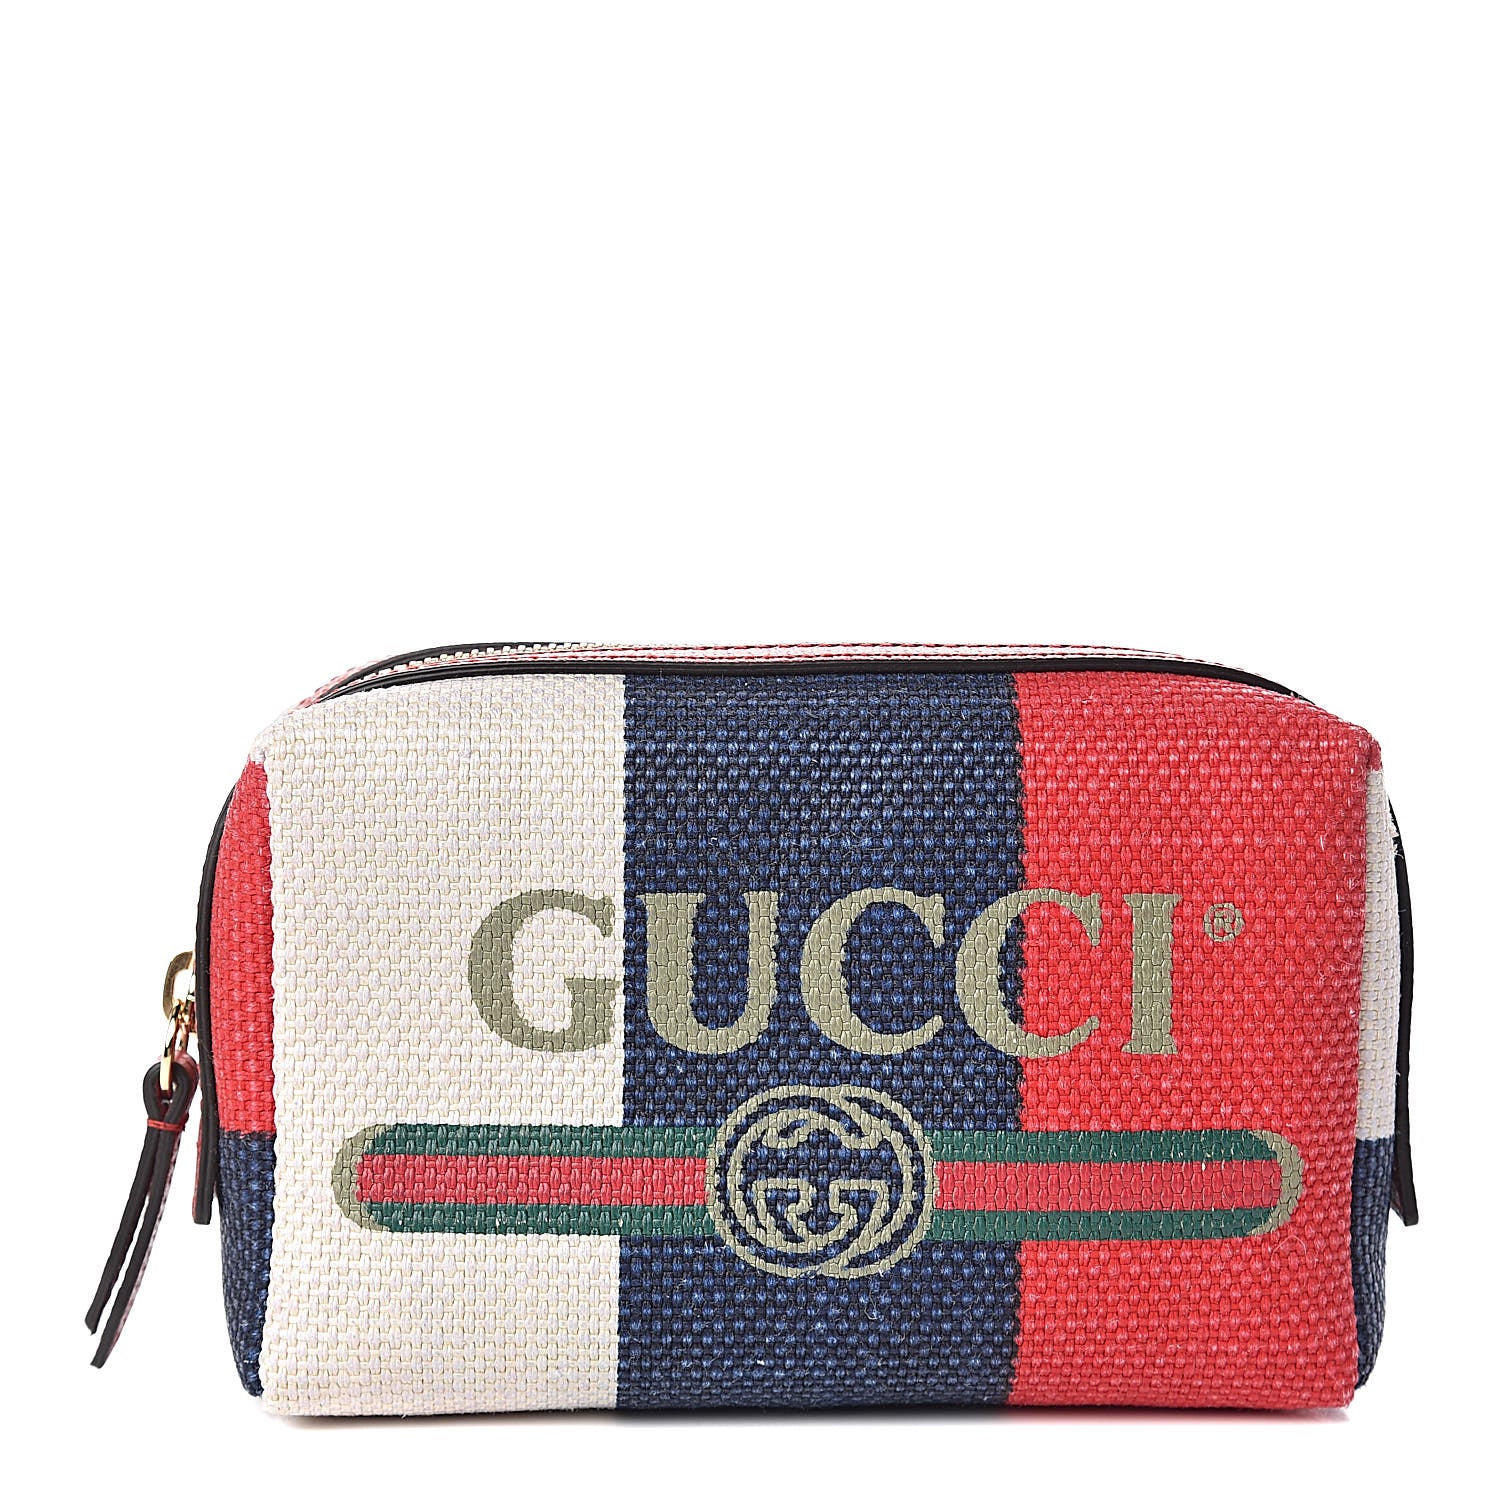 Gucci Makeup Bag 